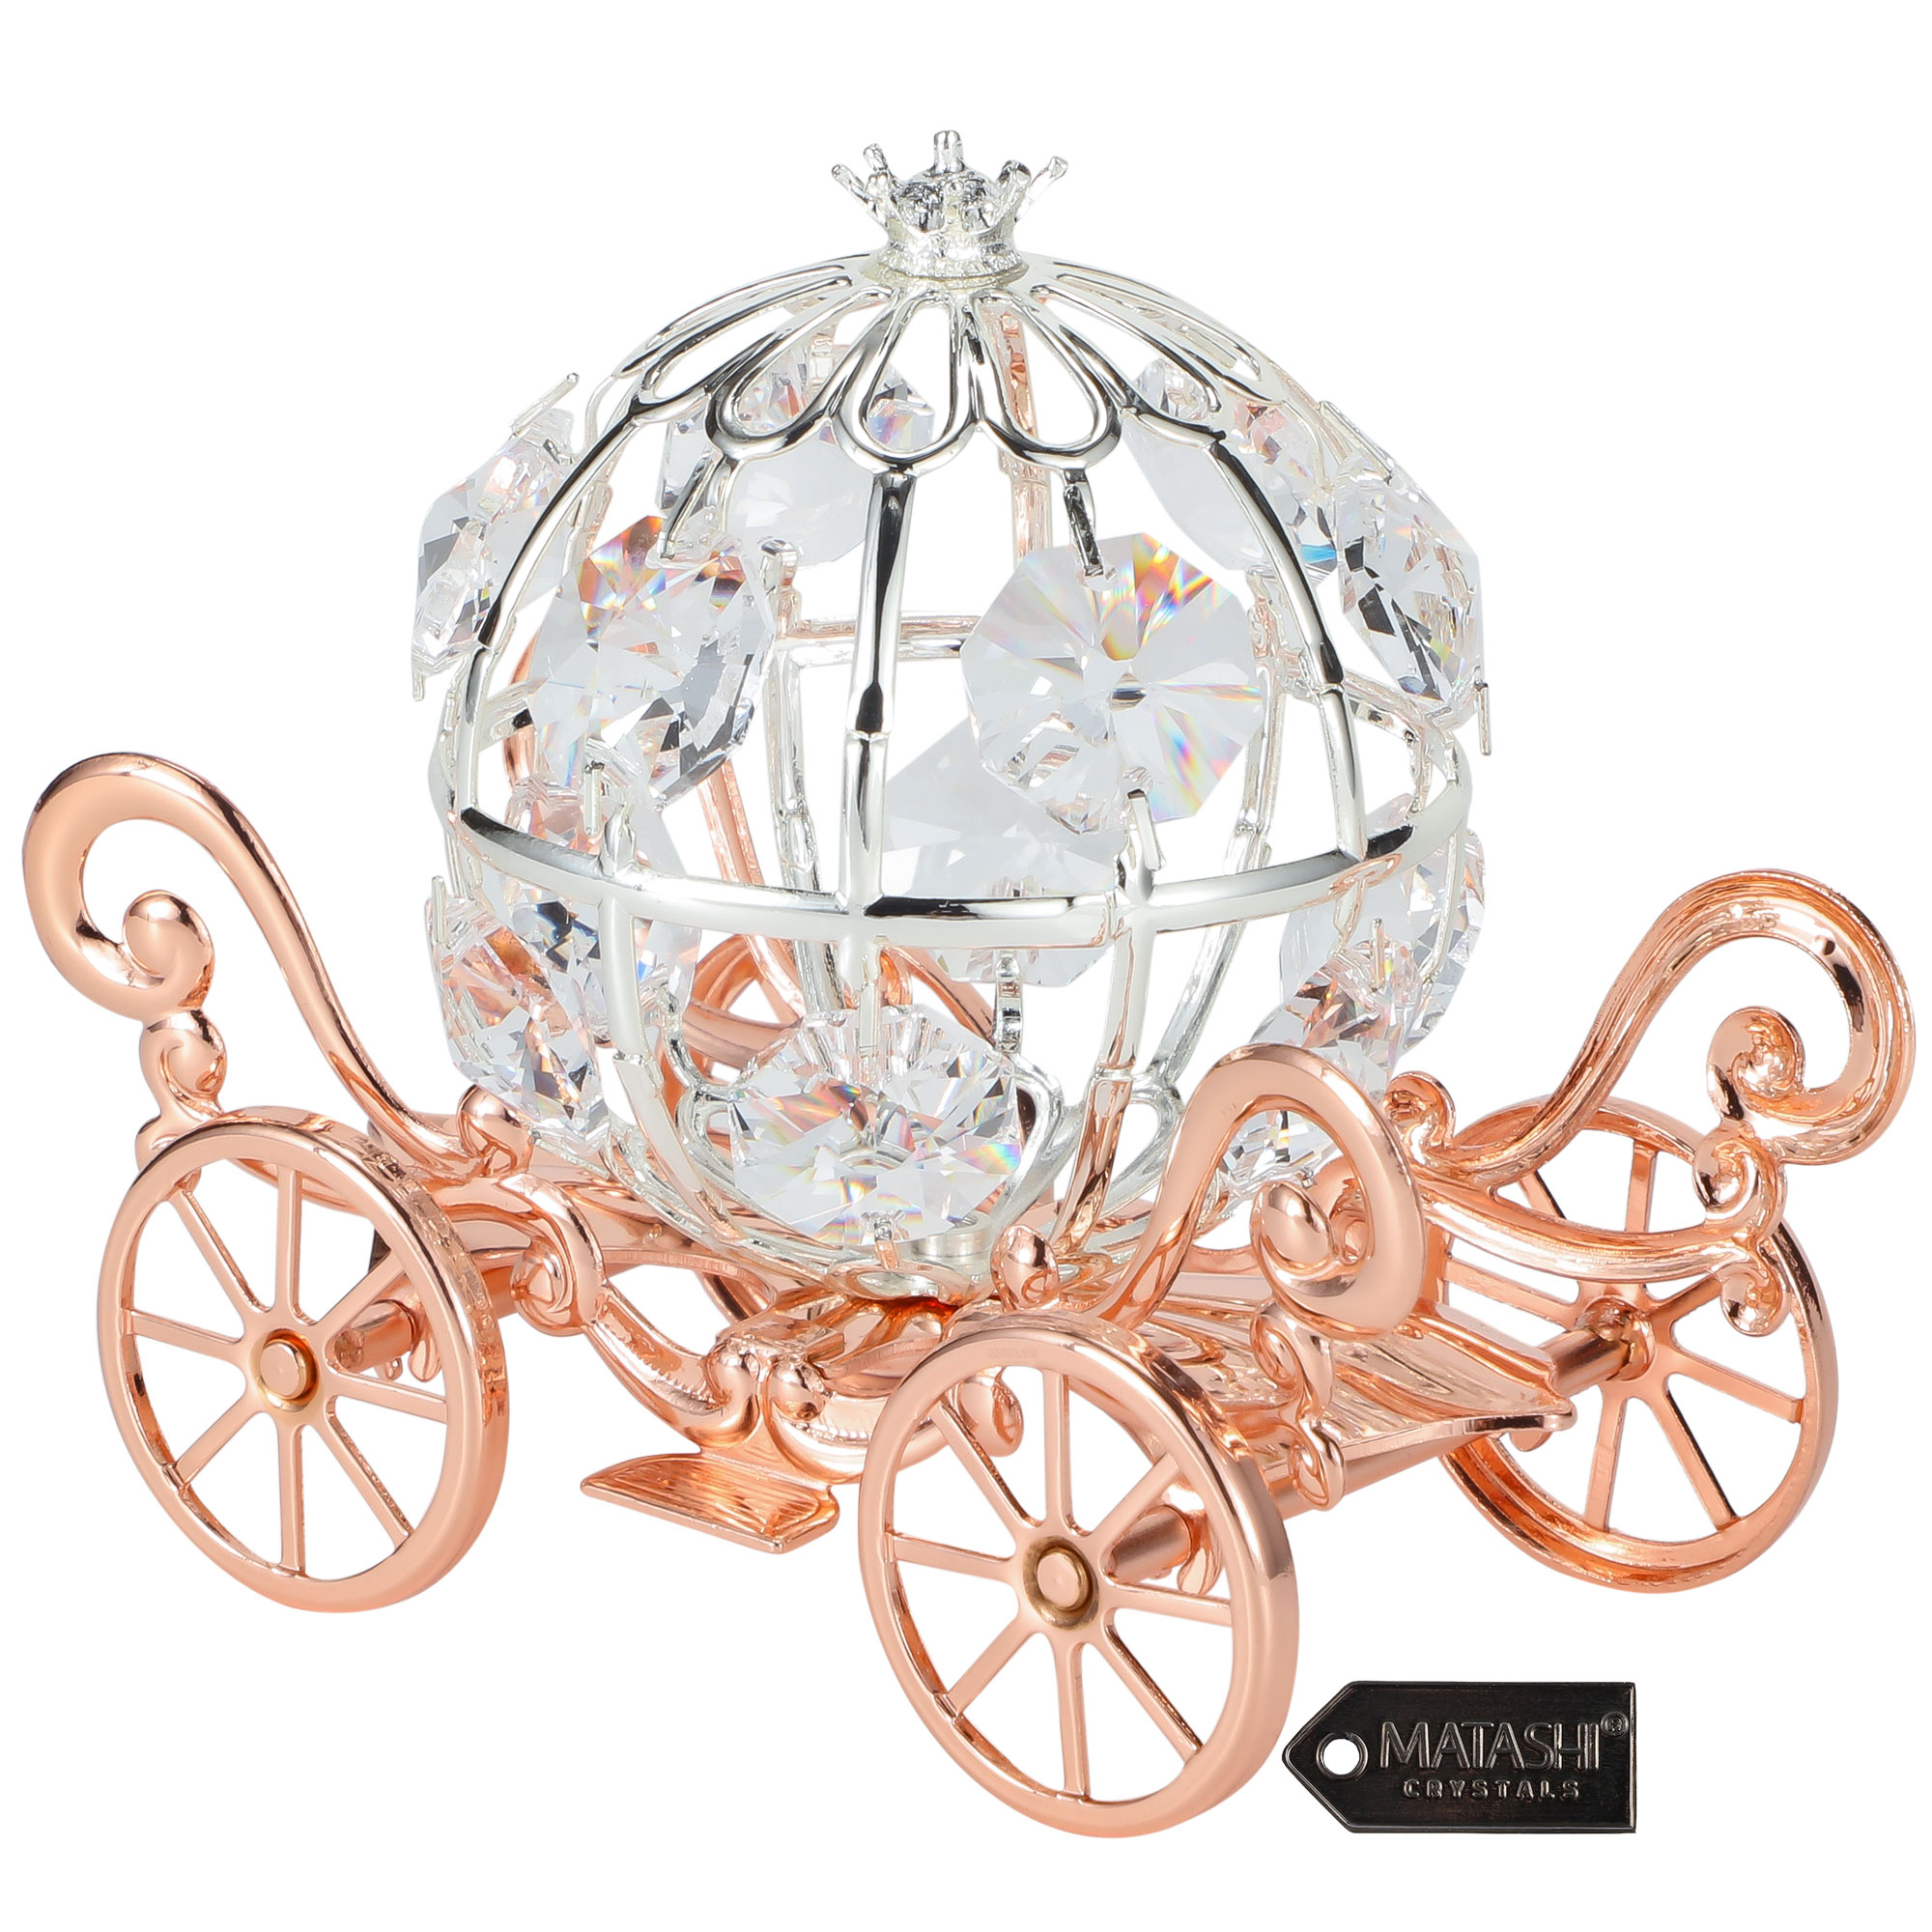 Matashi Rose Gold Crystal Studded Small Cinderella Pumpkin Coach Ornament Tabletop Home Decorative Showpiece Gift For Christmas